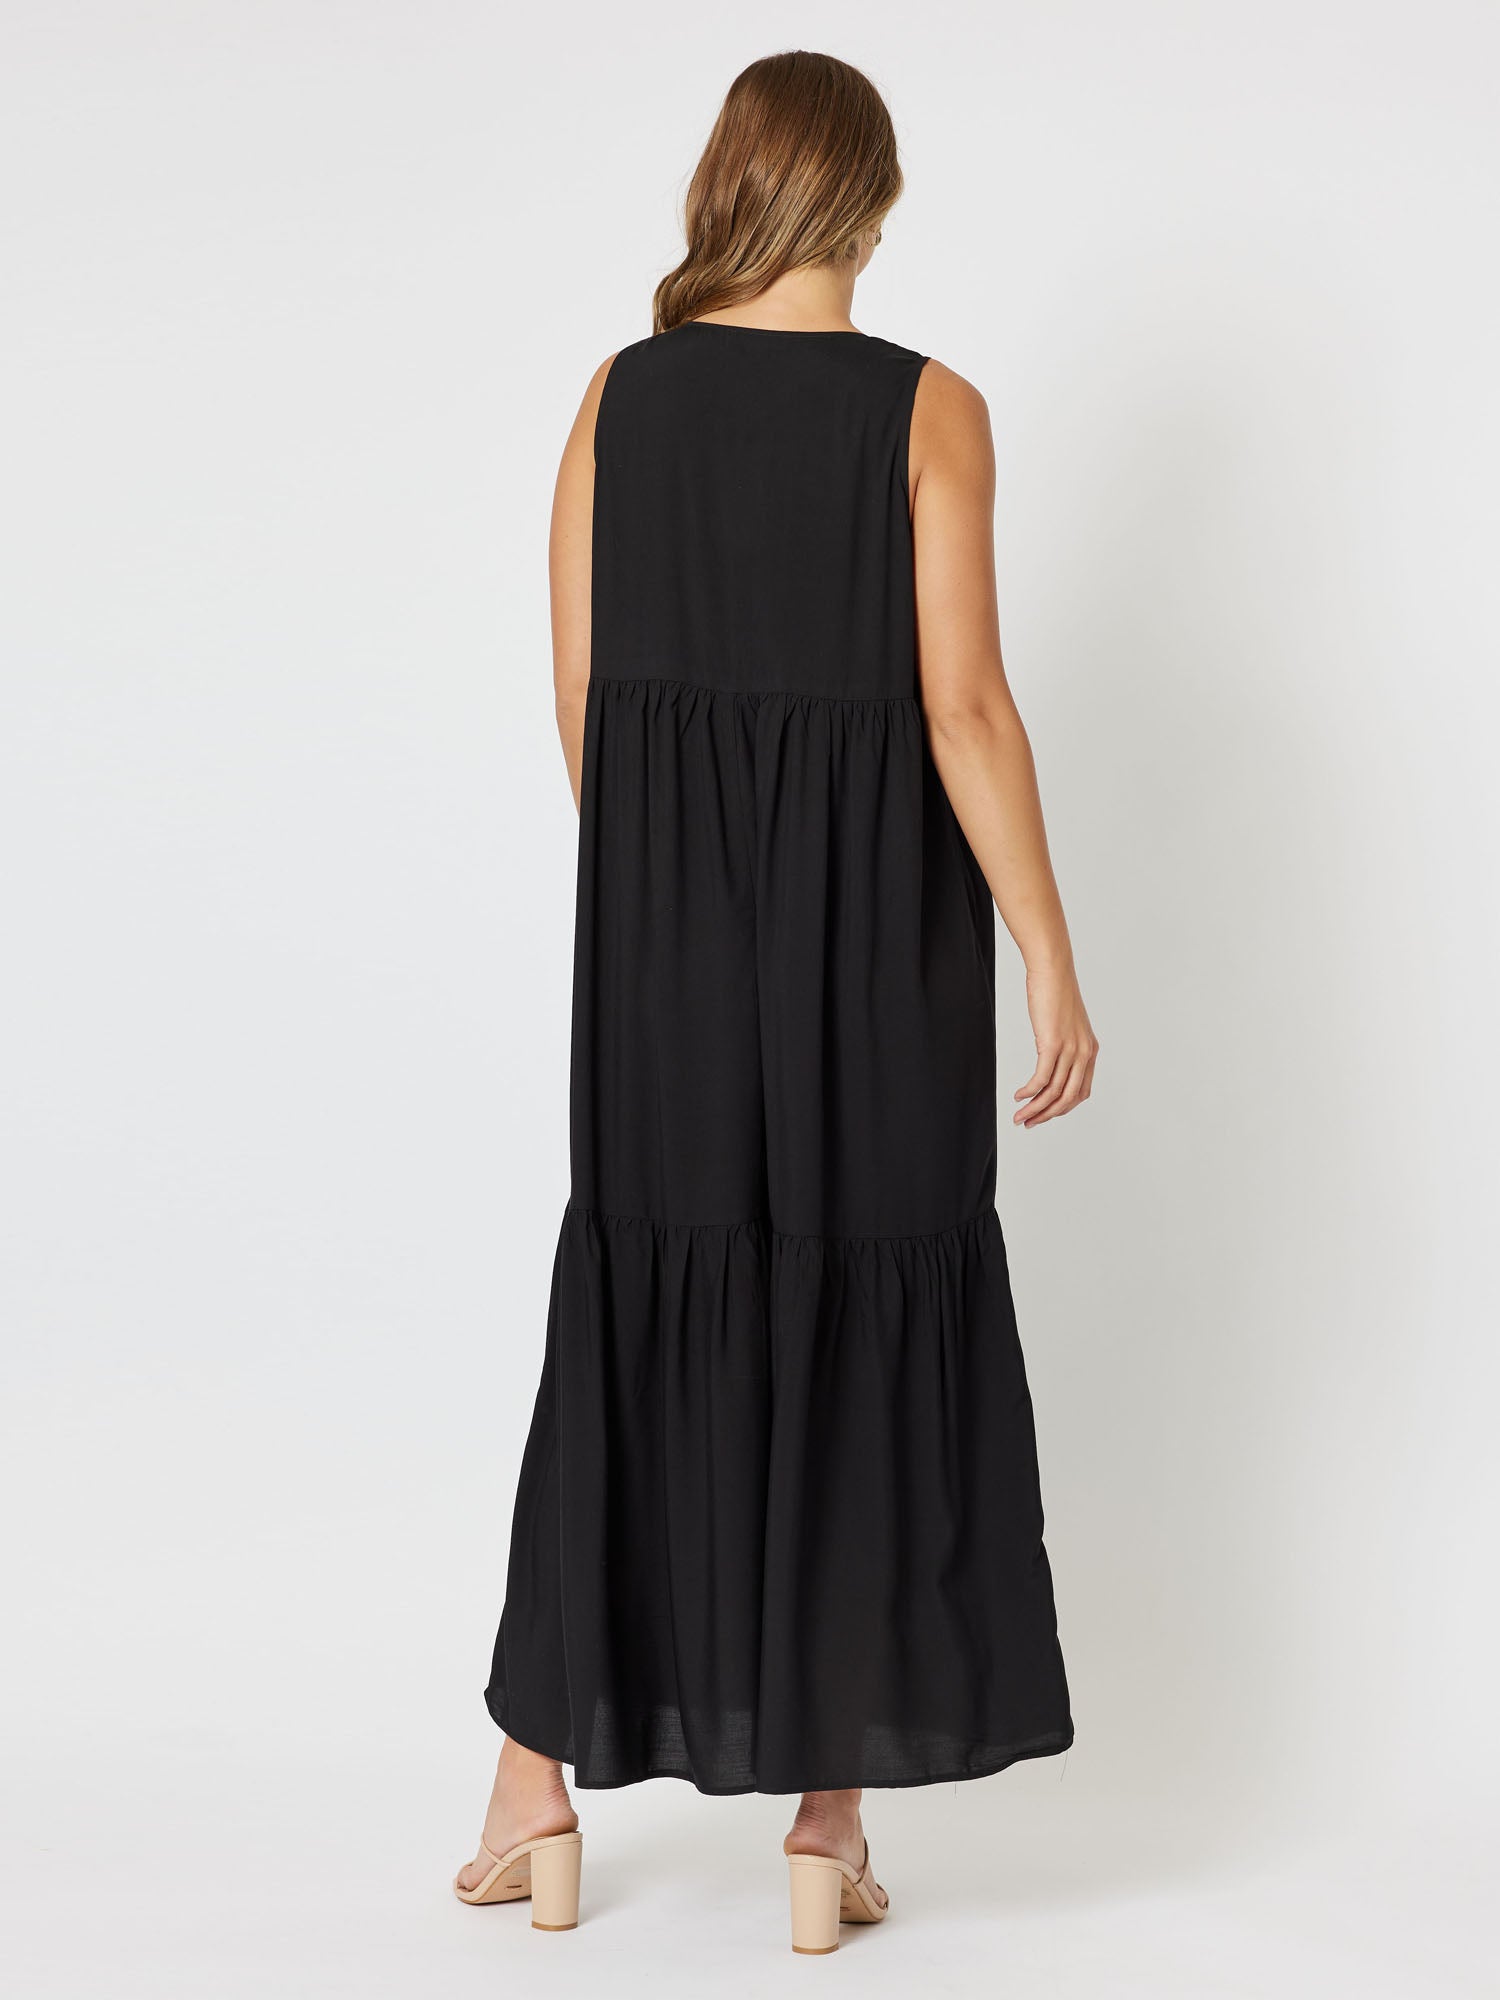 Hamilton Maxi Dress - Black